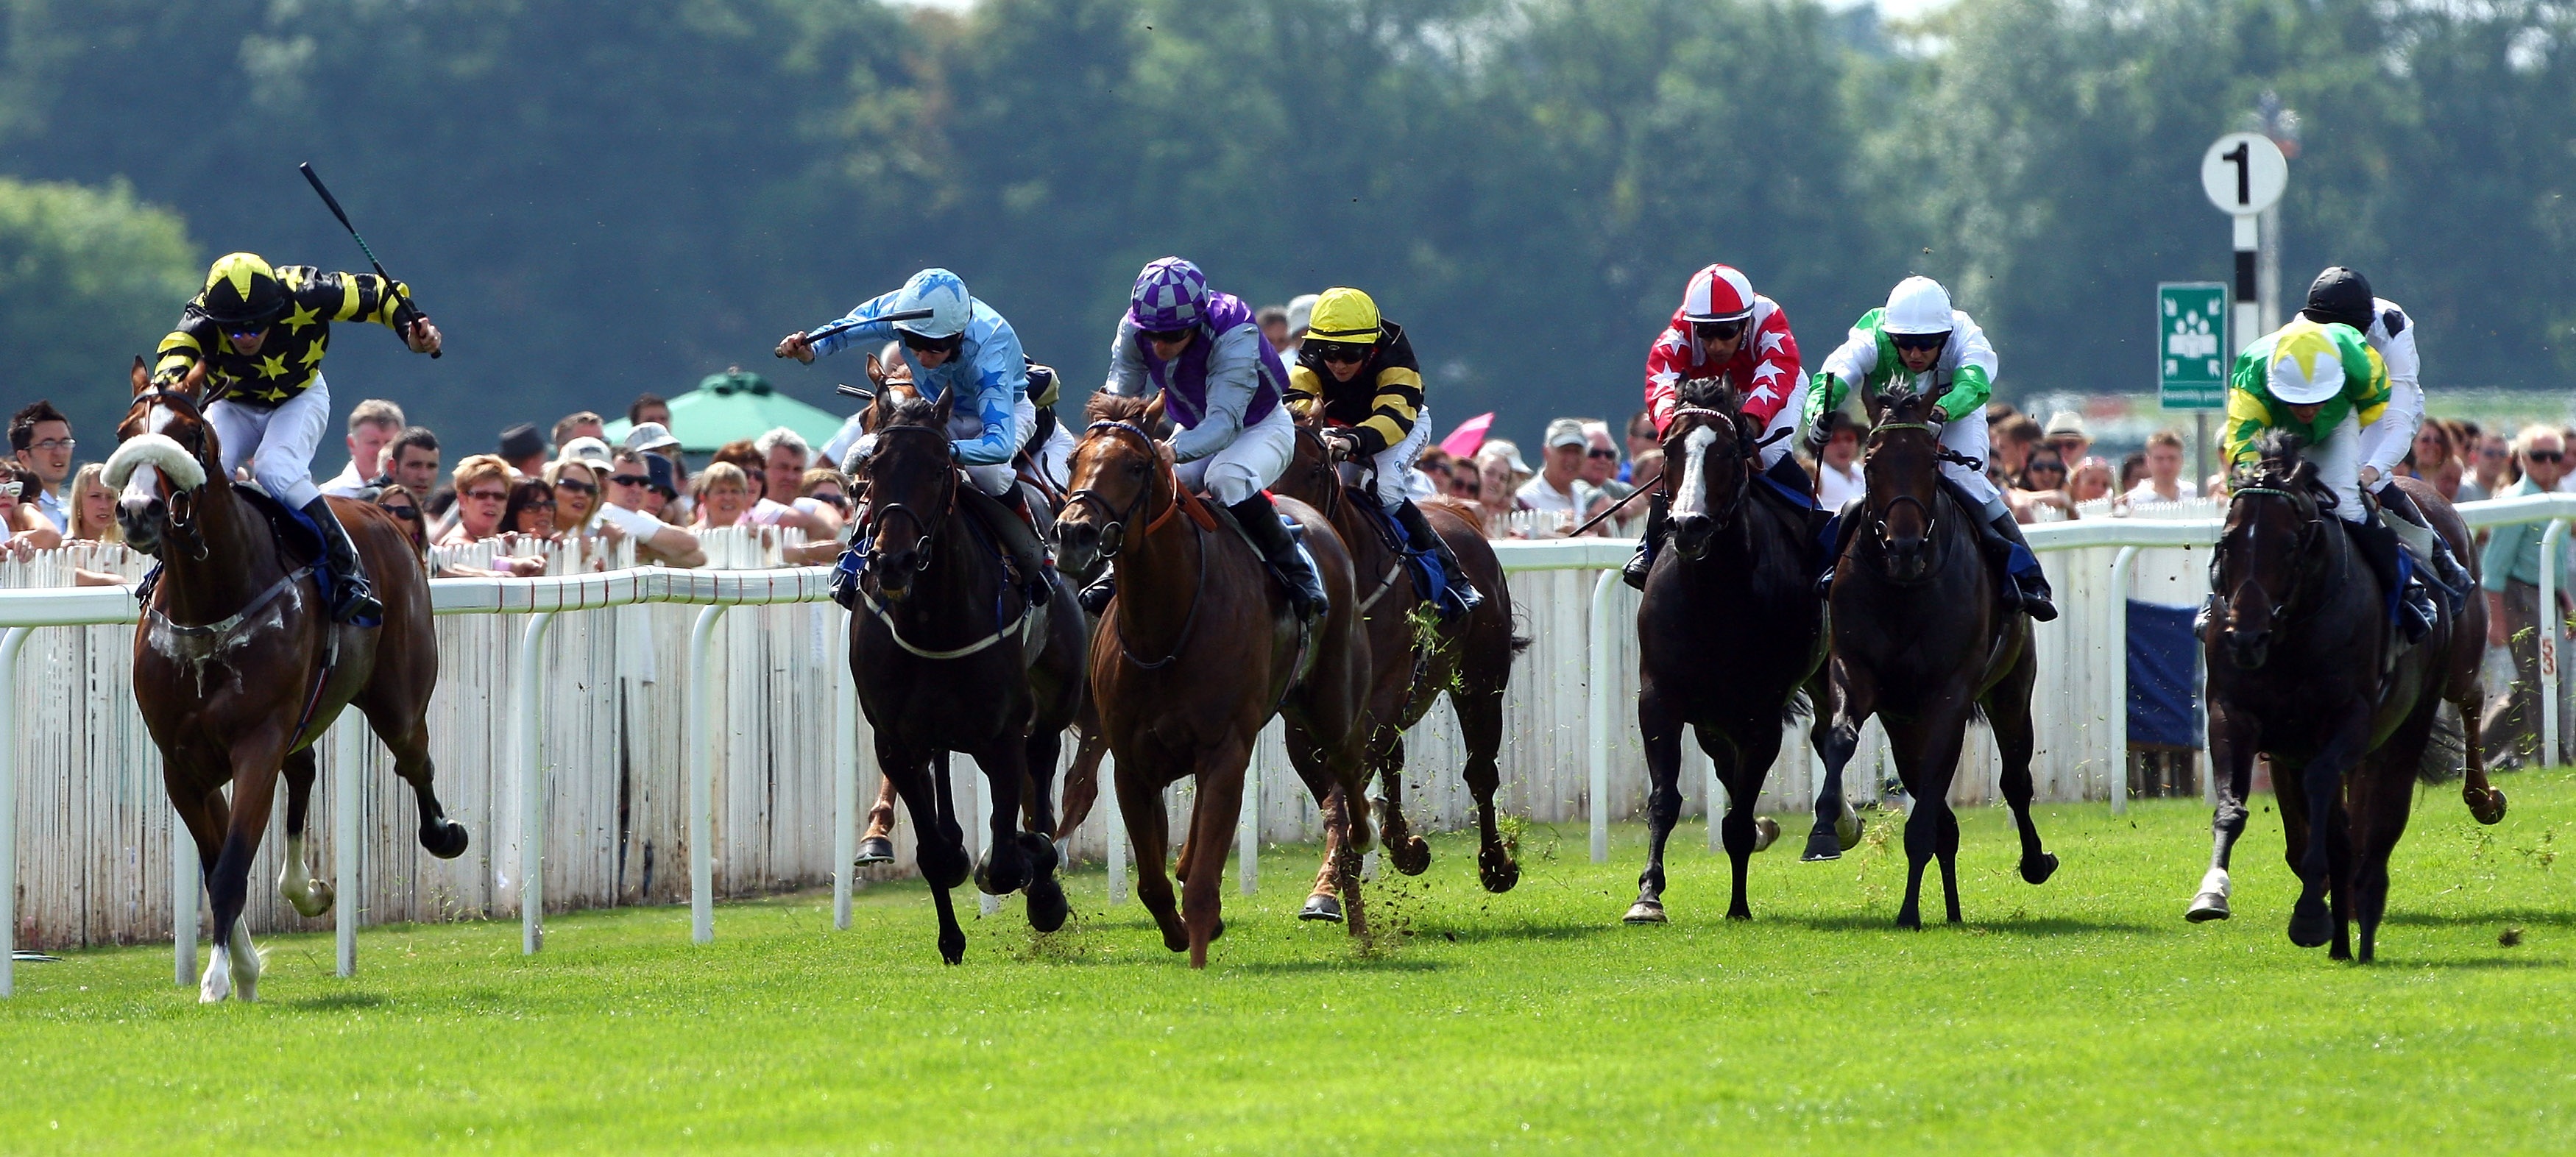 online horse racing betting uk guide